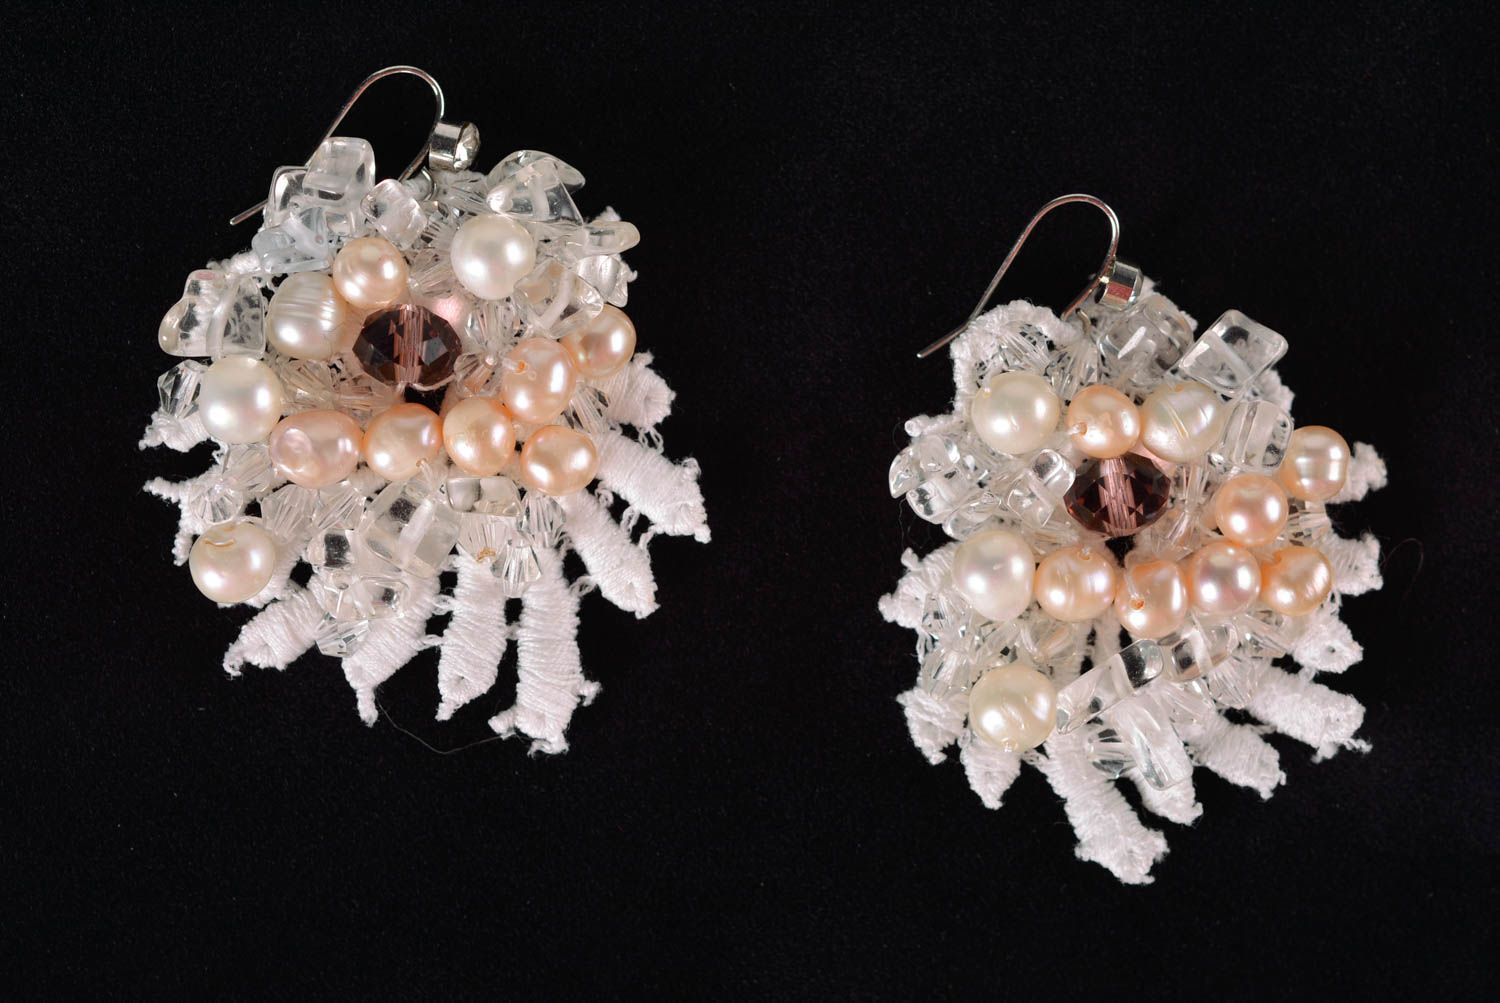 Stone jewelry handmade earrings fashion accessories unique earrings gift ideas photo 1